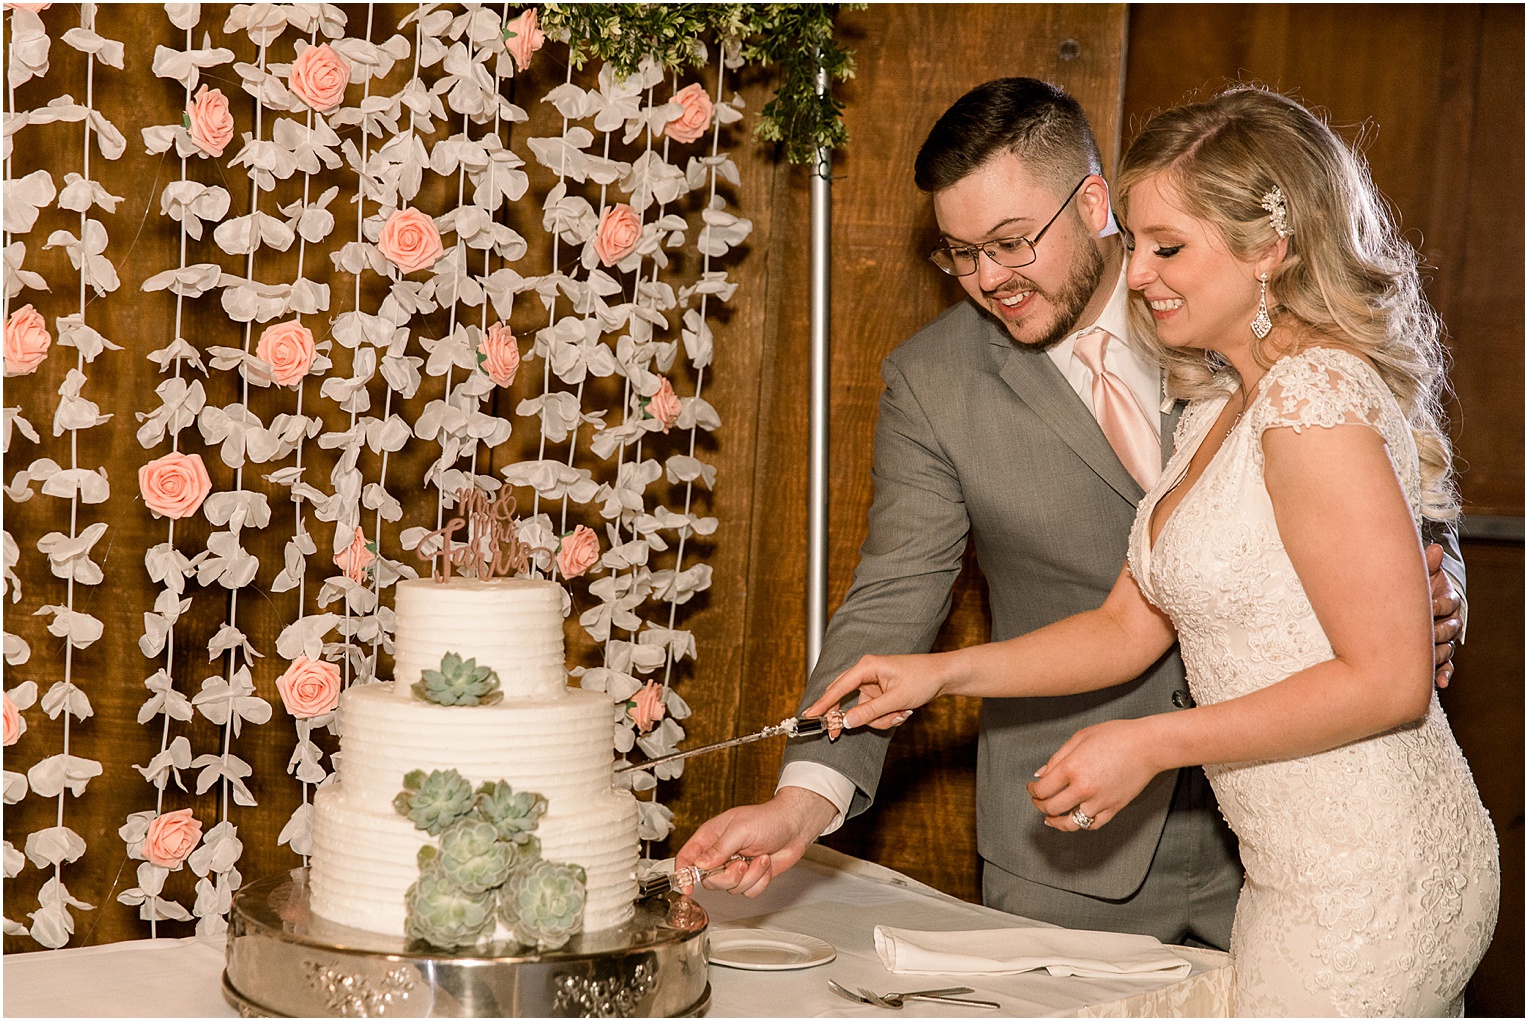 Annabelle + James Hilton El Conquistador Wedding reception cake cutting